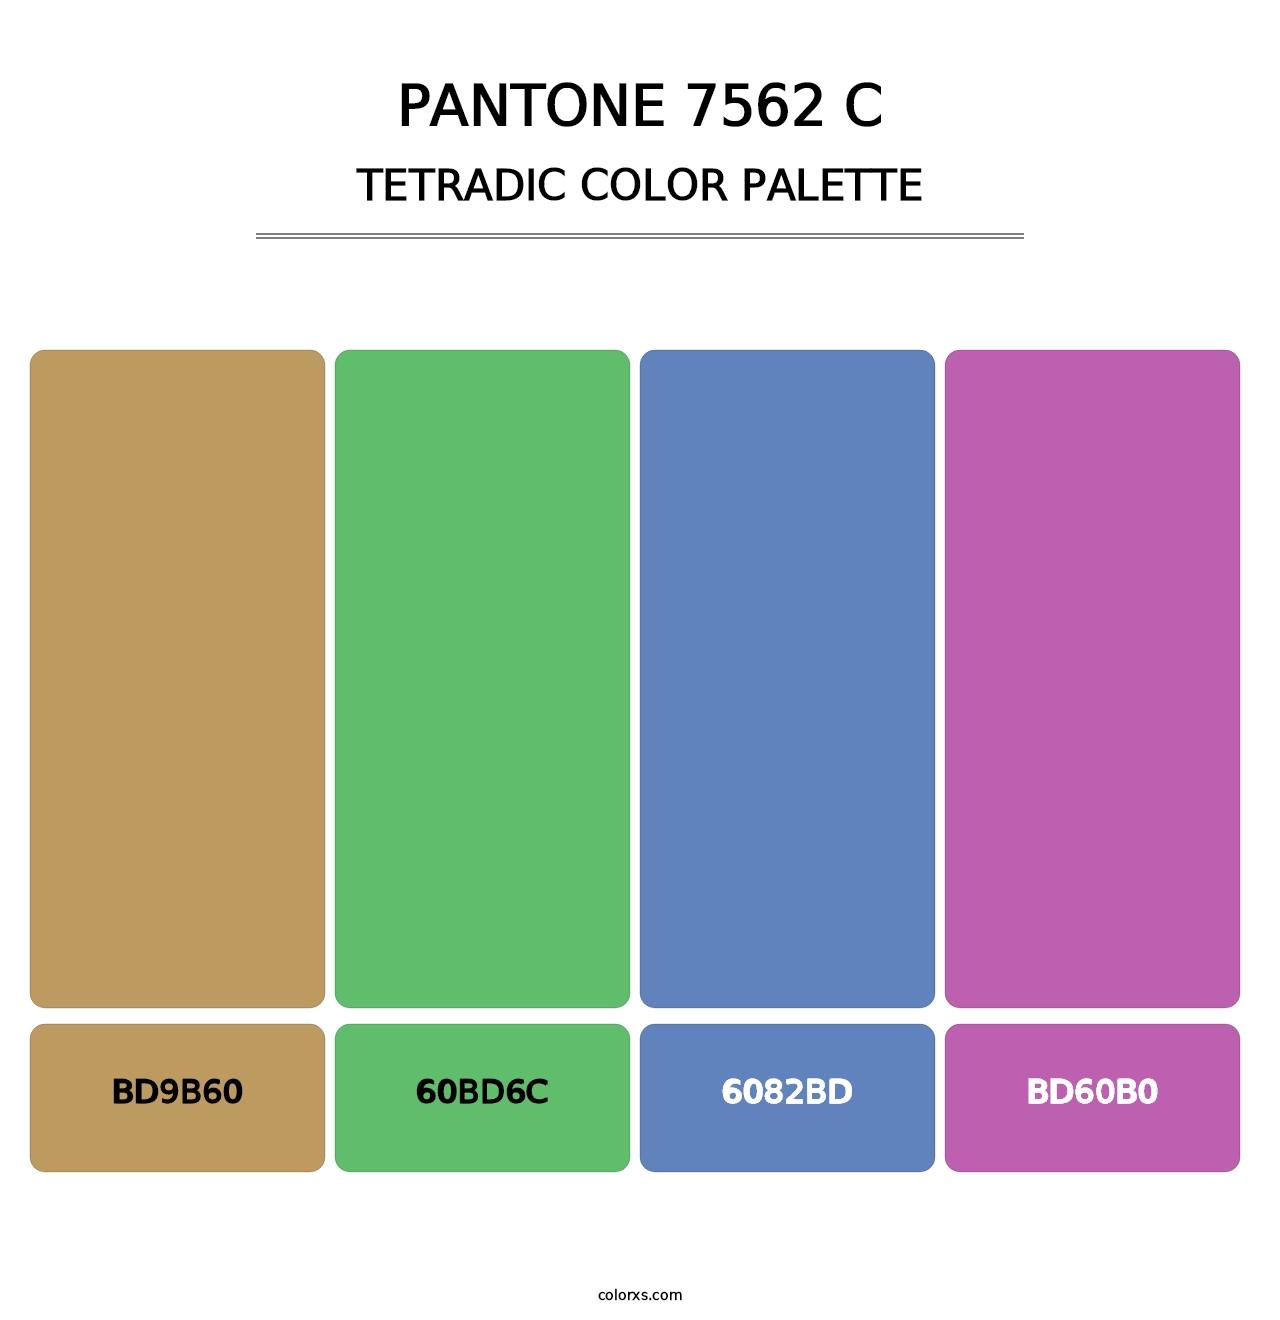 PANTONE 7562 C - Tetradic Color Palette